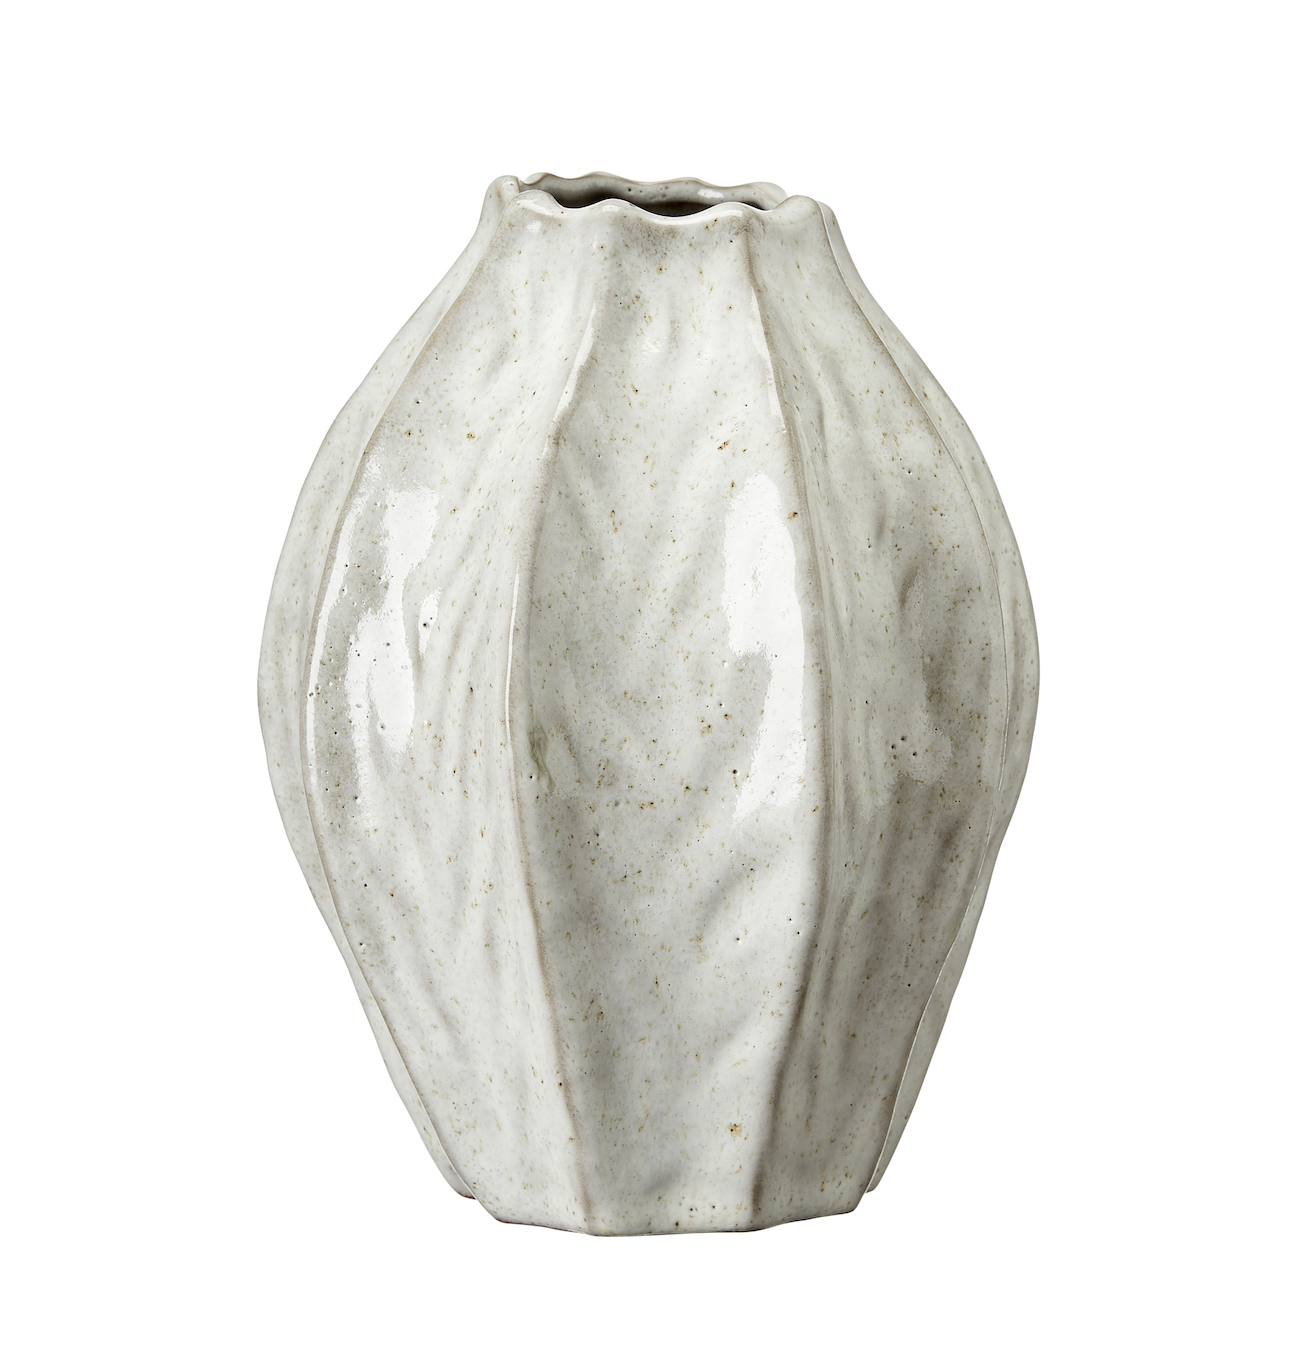 Donna Off White Speckled Ceramic Vase